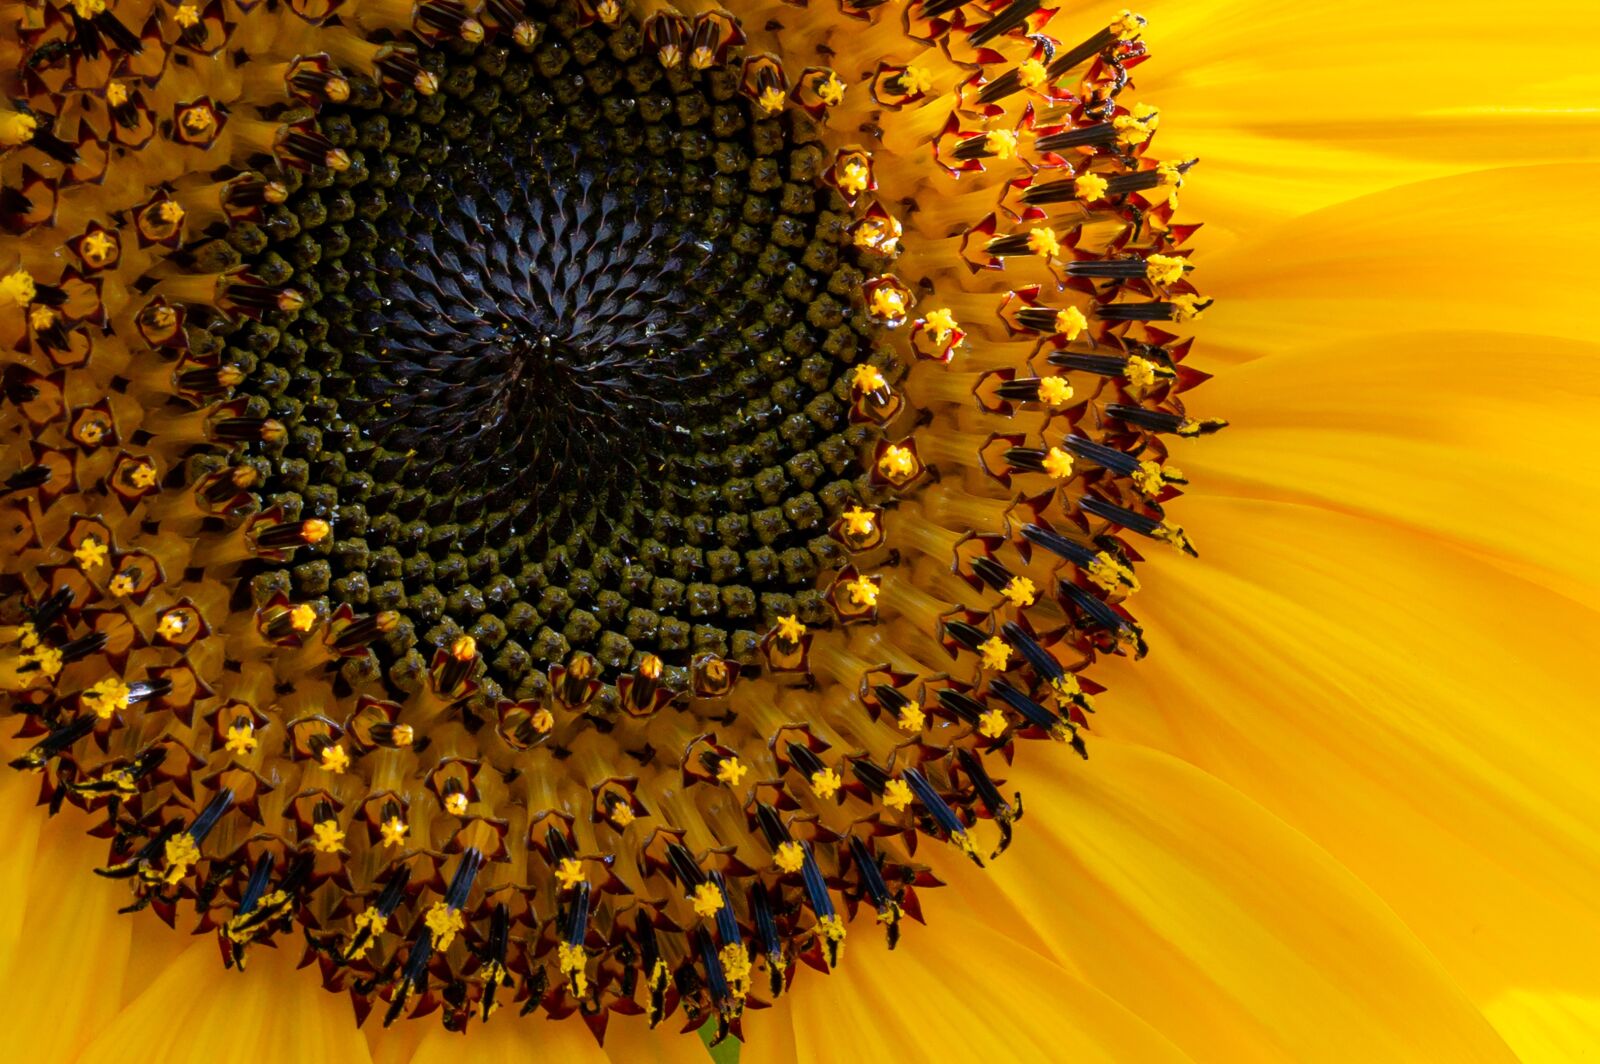 90mm F2.8 Macro G OSS sample photo. Sunflower, close up, flower photography